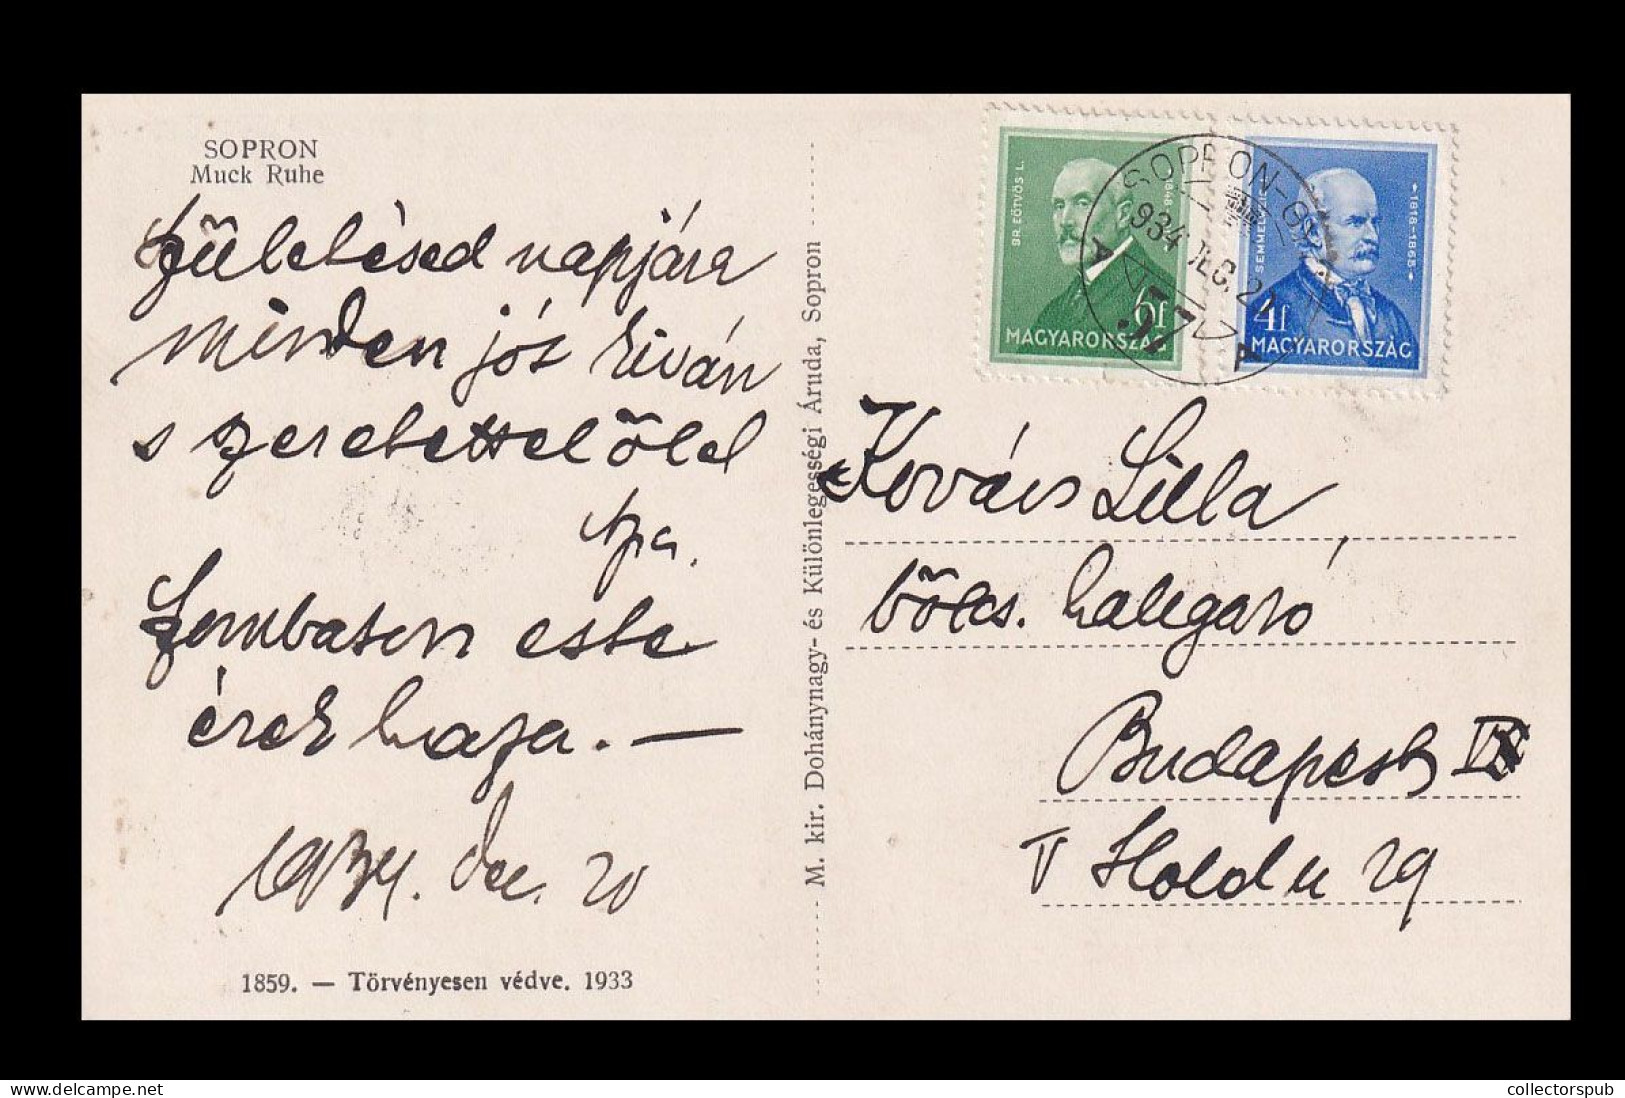 SOPRON 1934. Vintage Postcard - Hungary